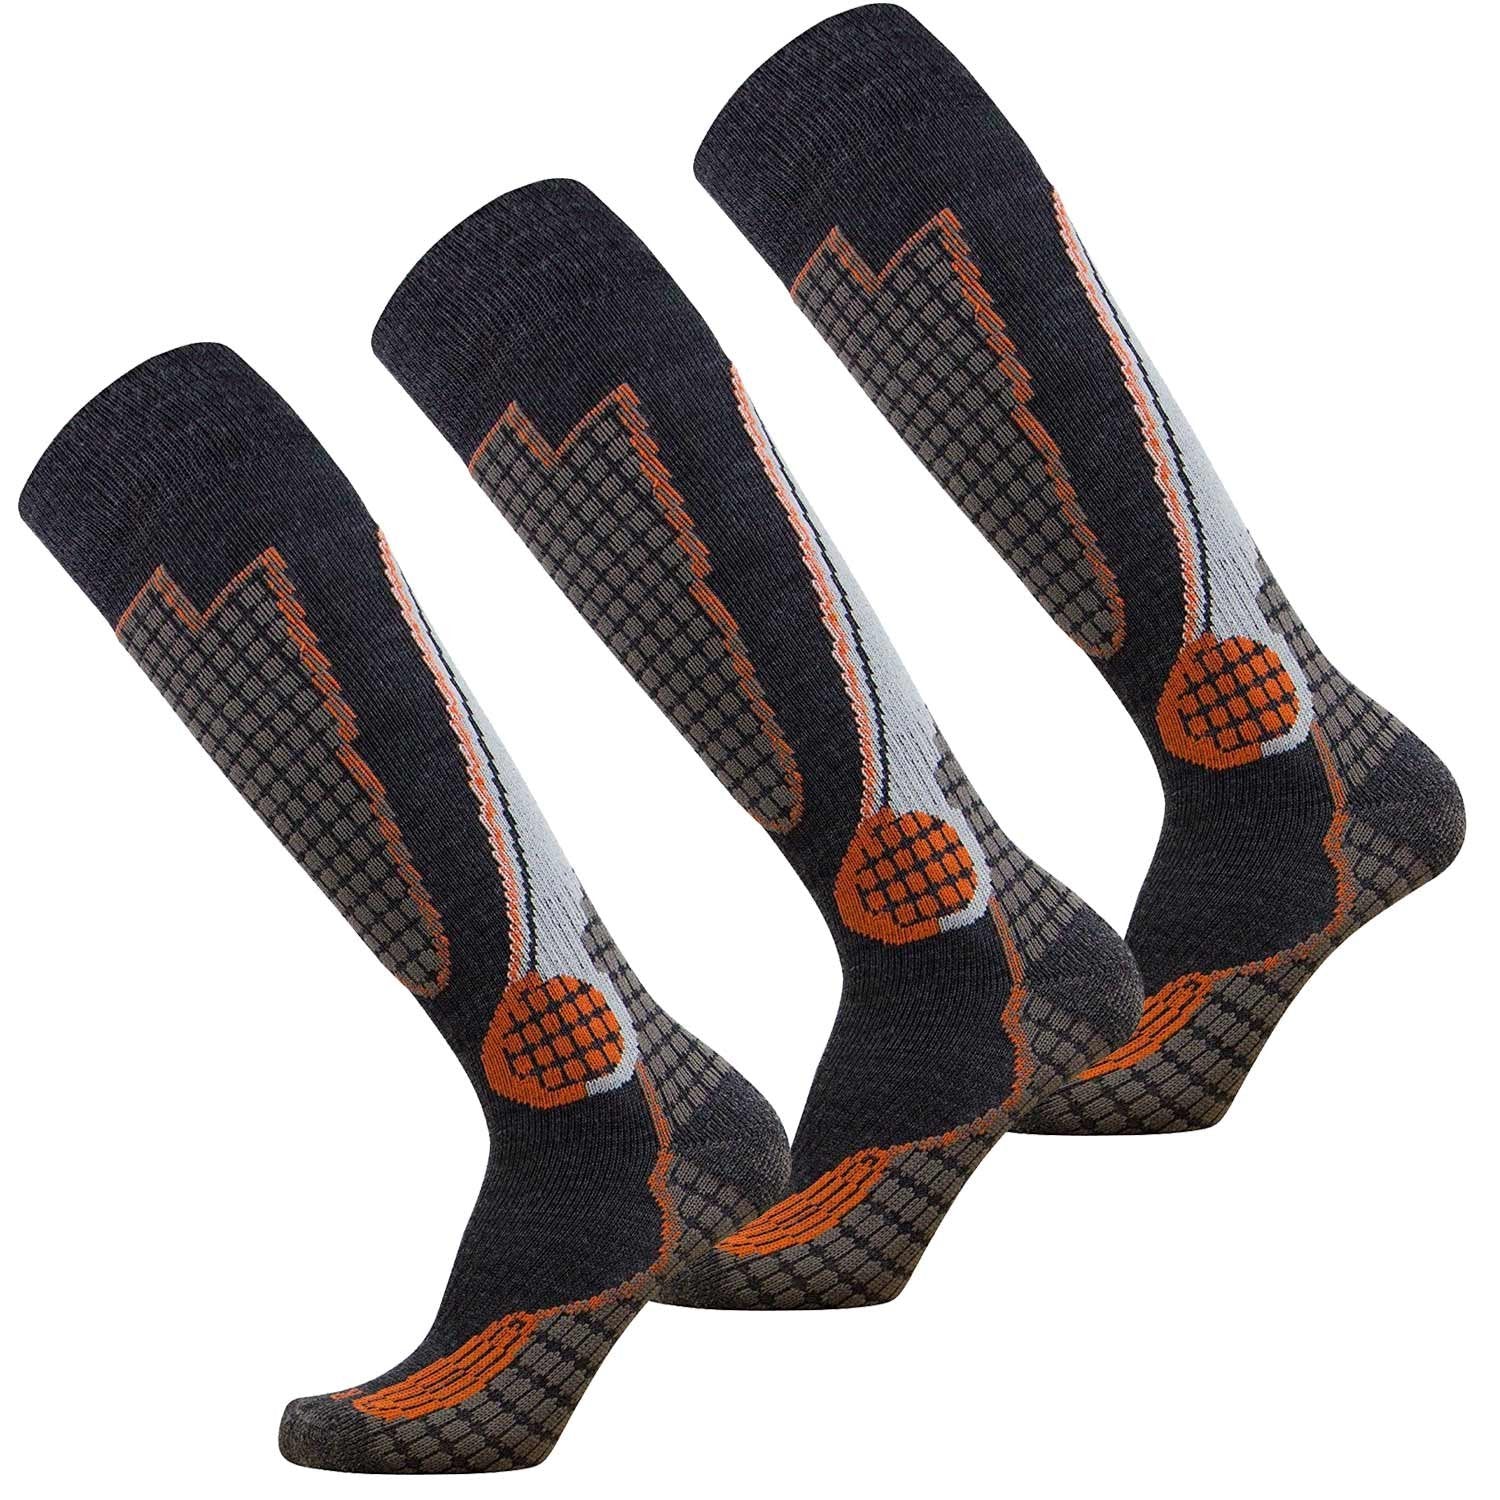 High Performance Wool Ski Socks